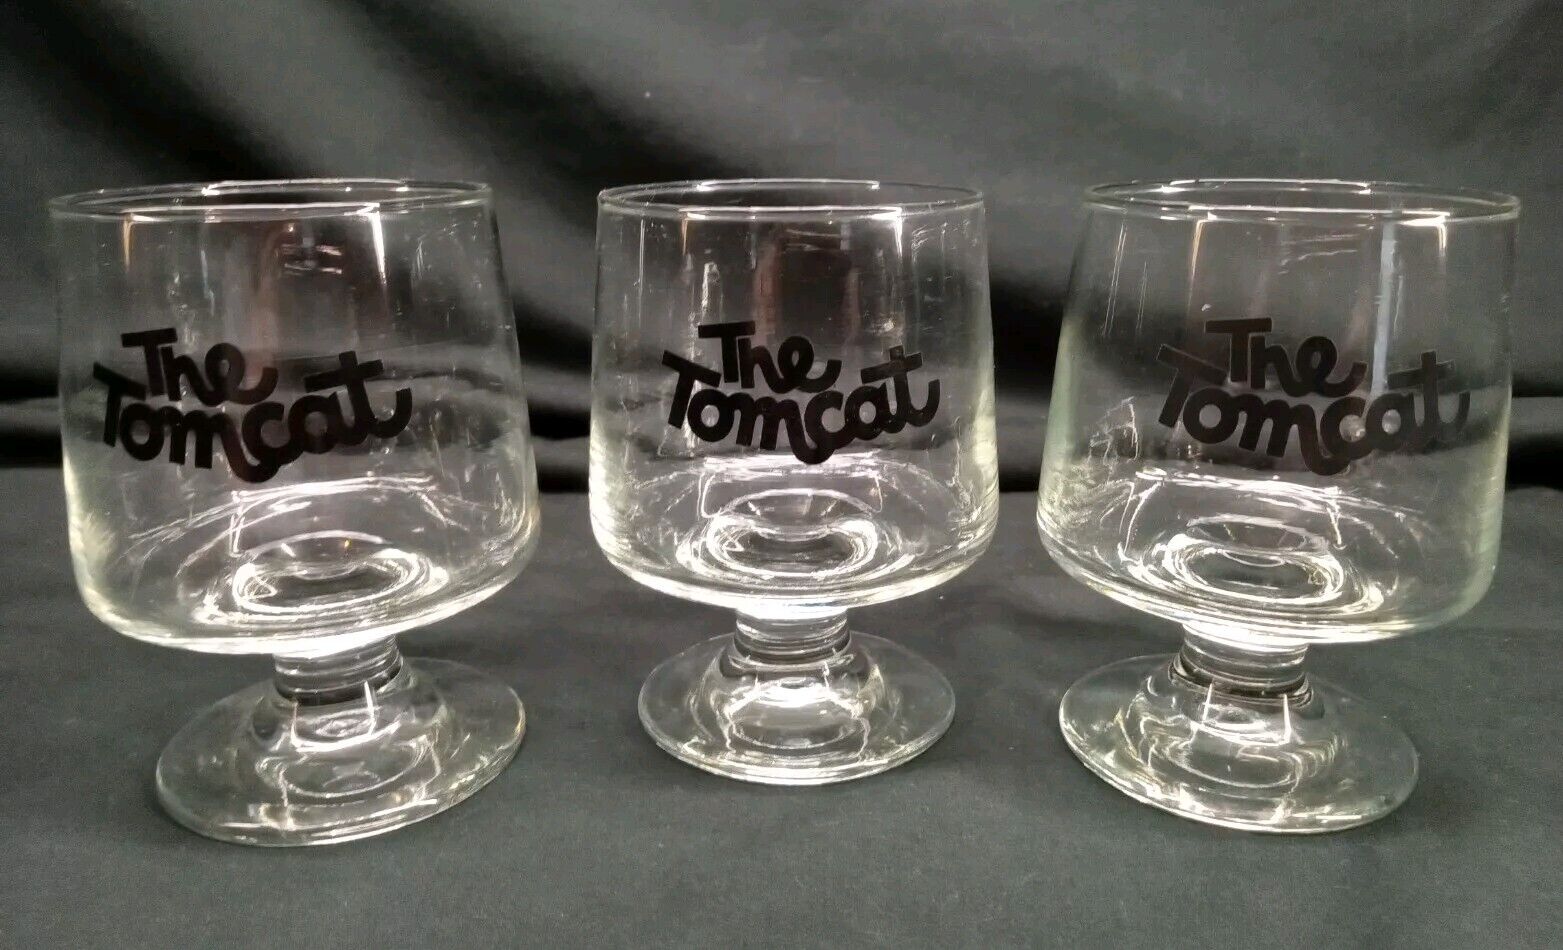  3 Vintage Barware Tomcat Liquor Glasses